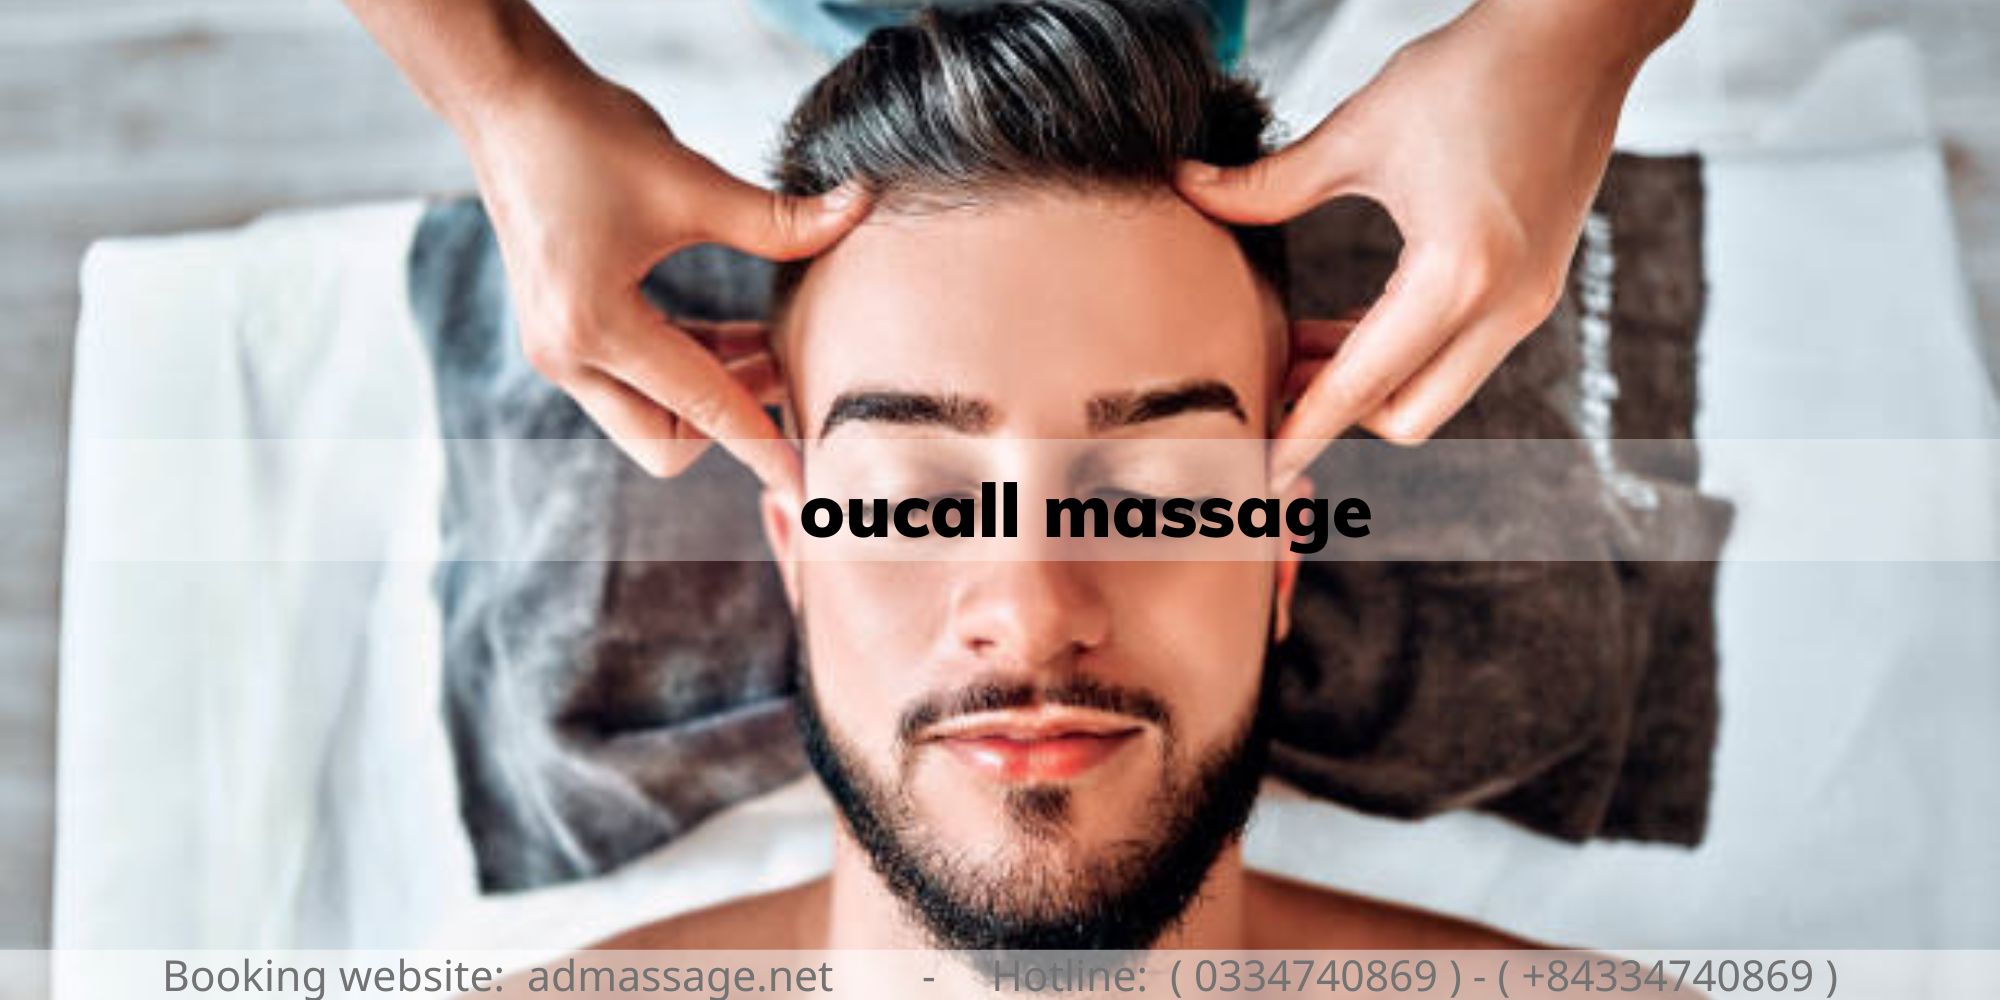 oucall massage